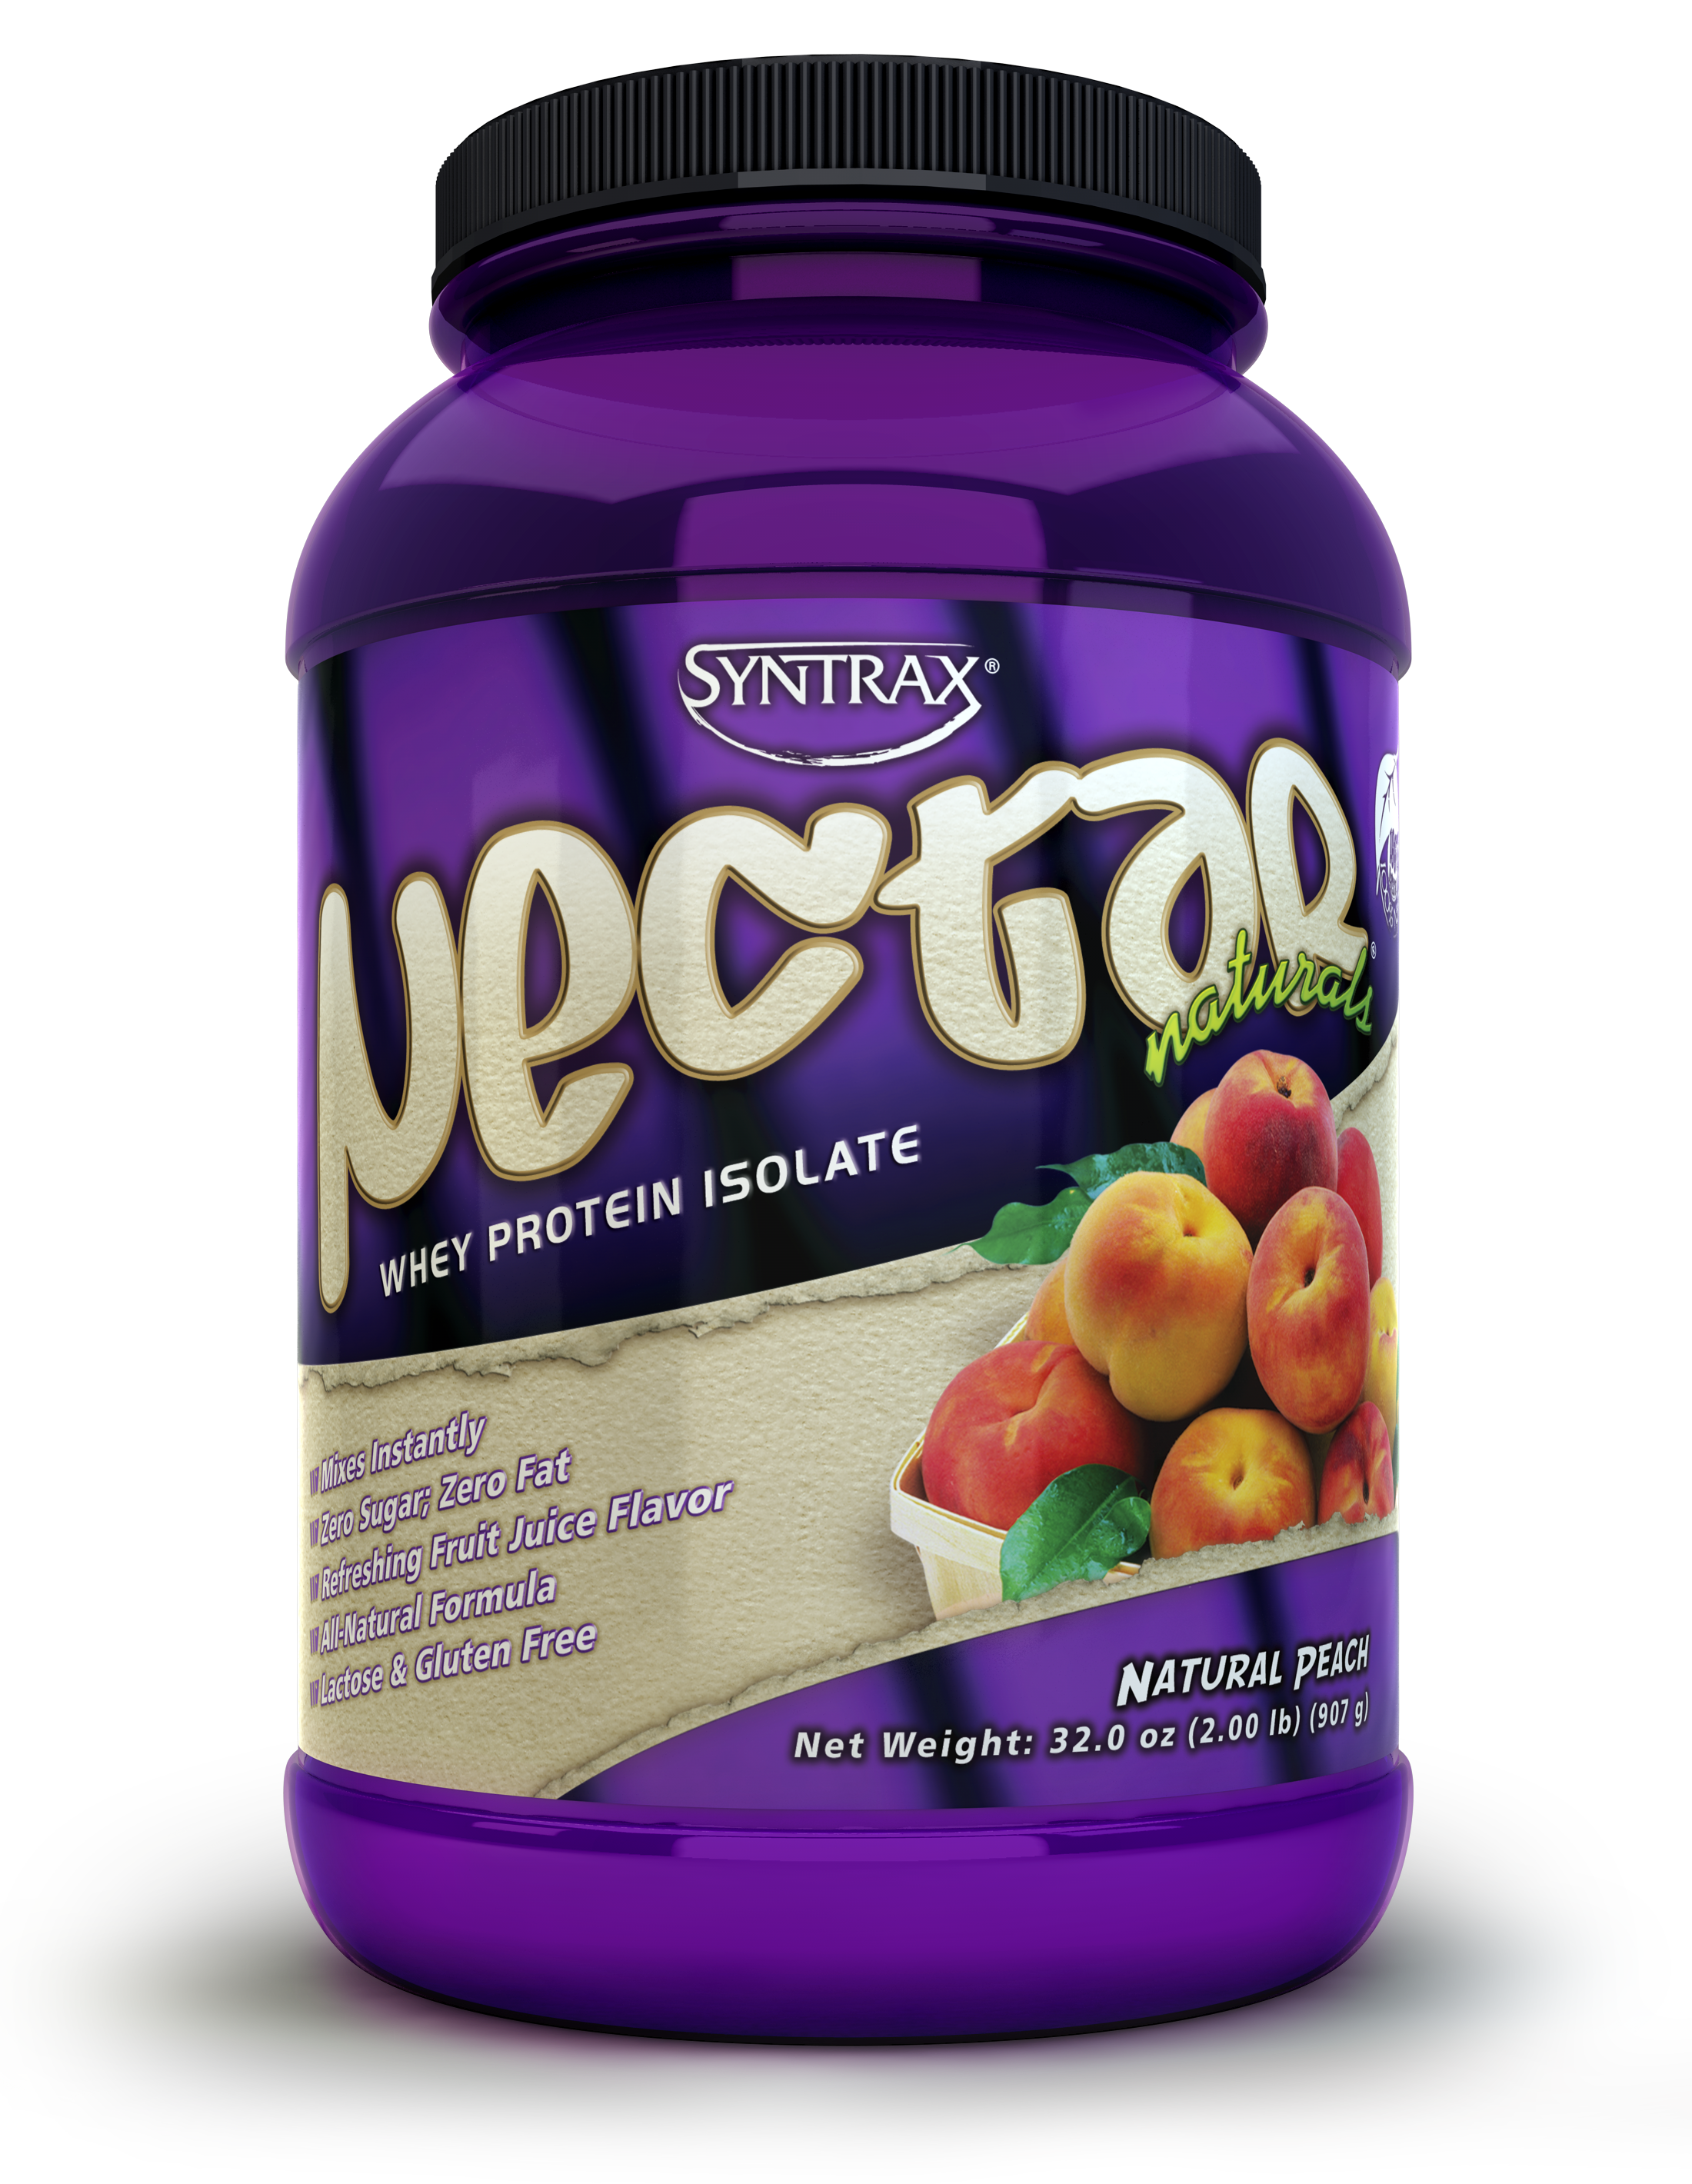 Syntrax Nectar Naturals - Natural Peach 2 lb